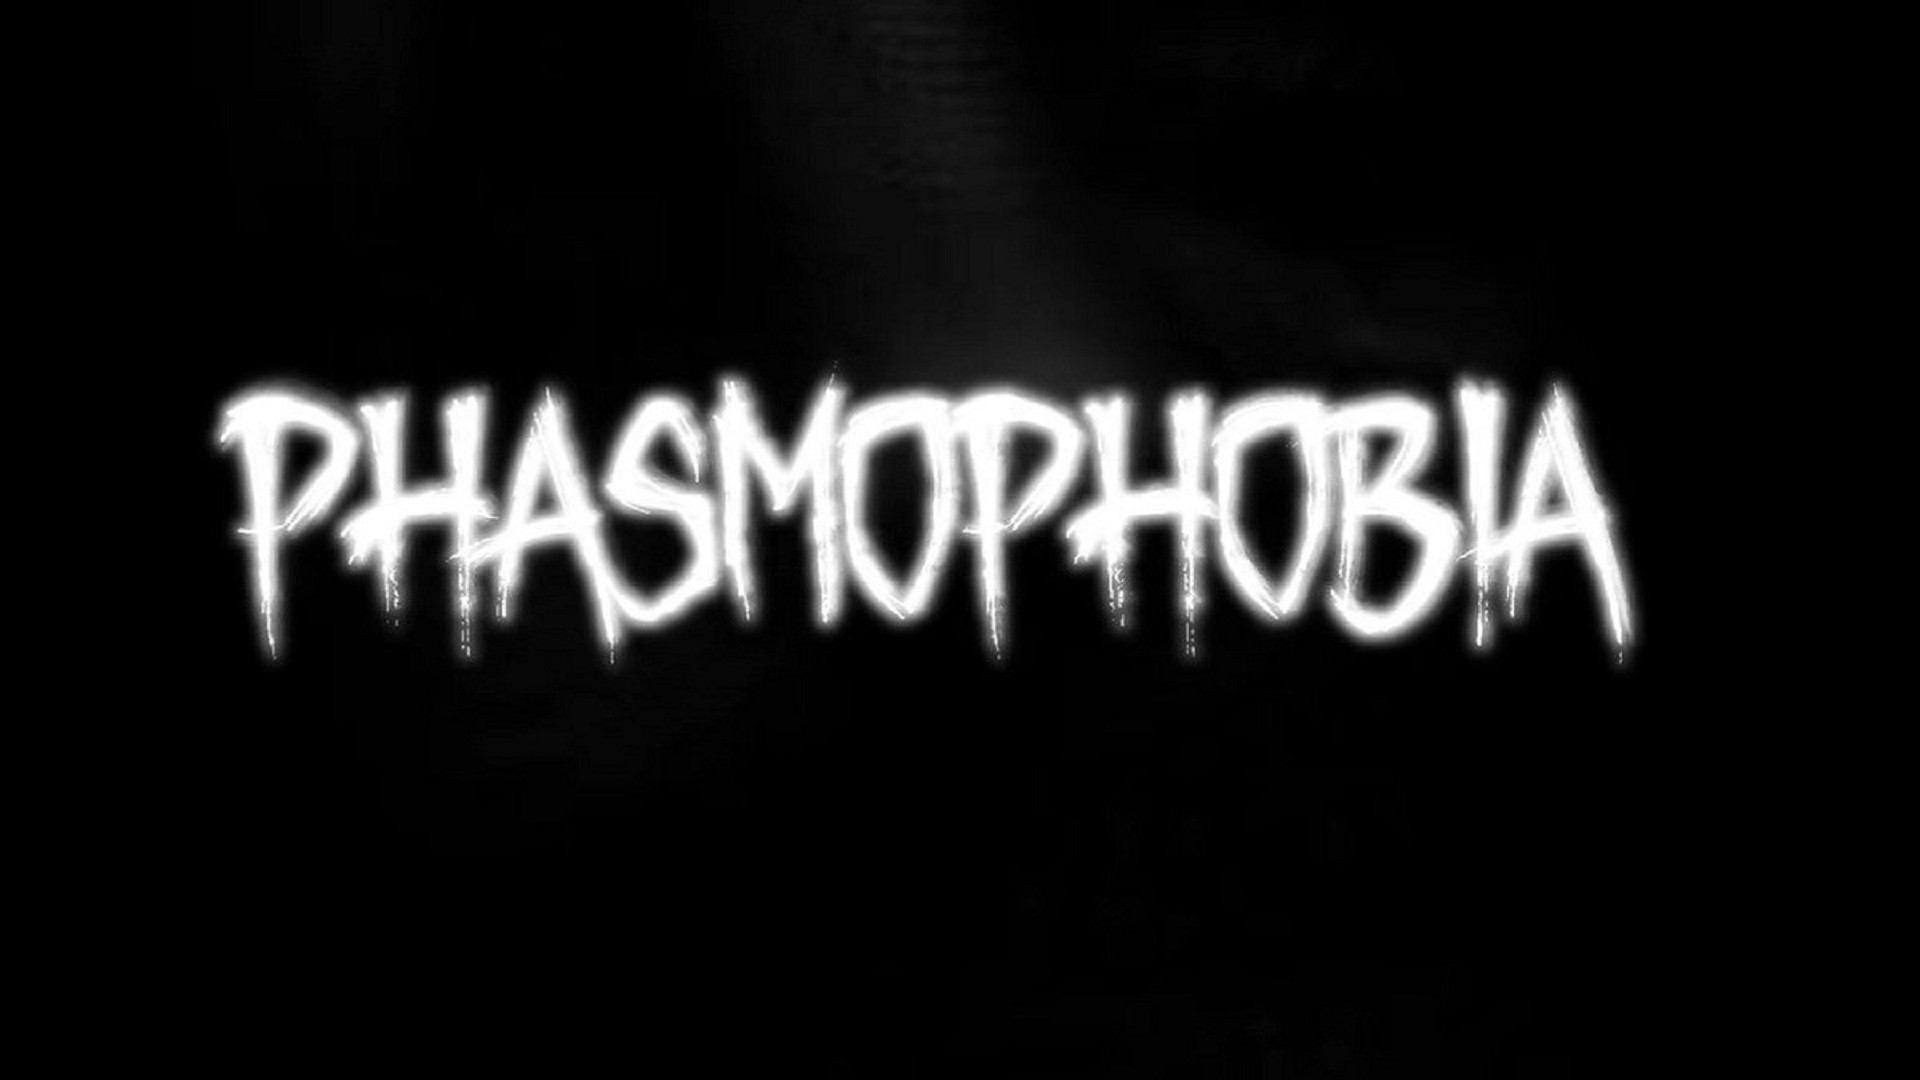 Phasmophobia brings hours of spooky ghost hunting fun